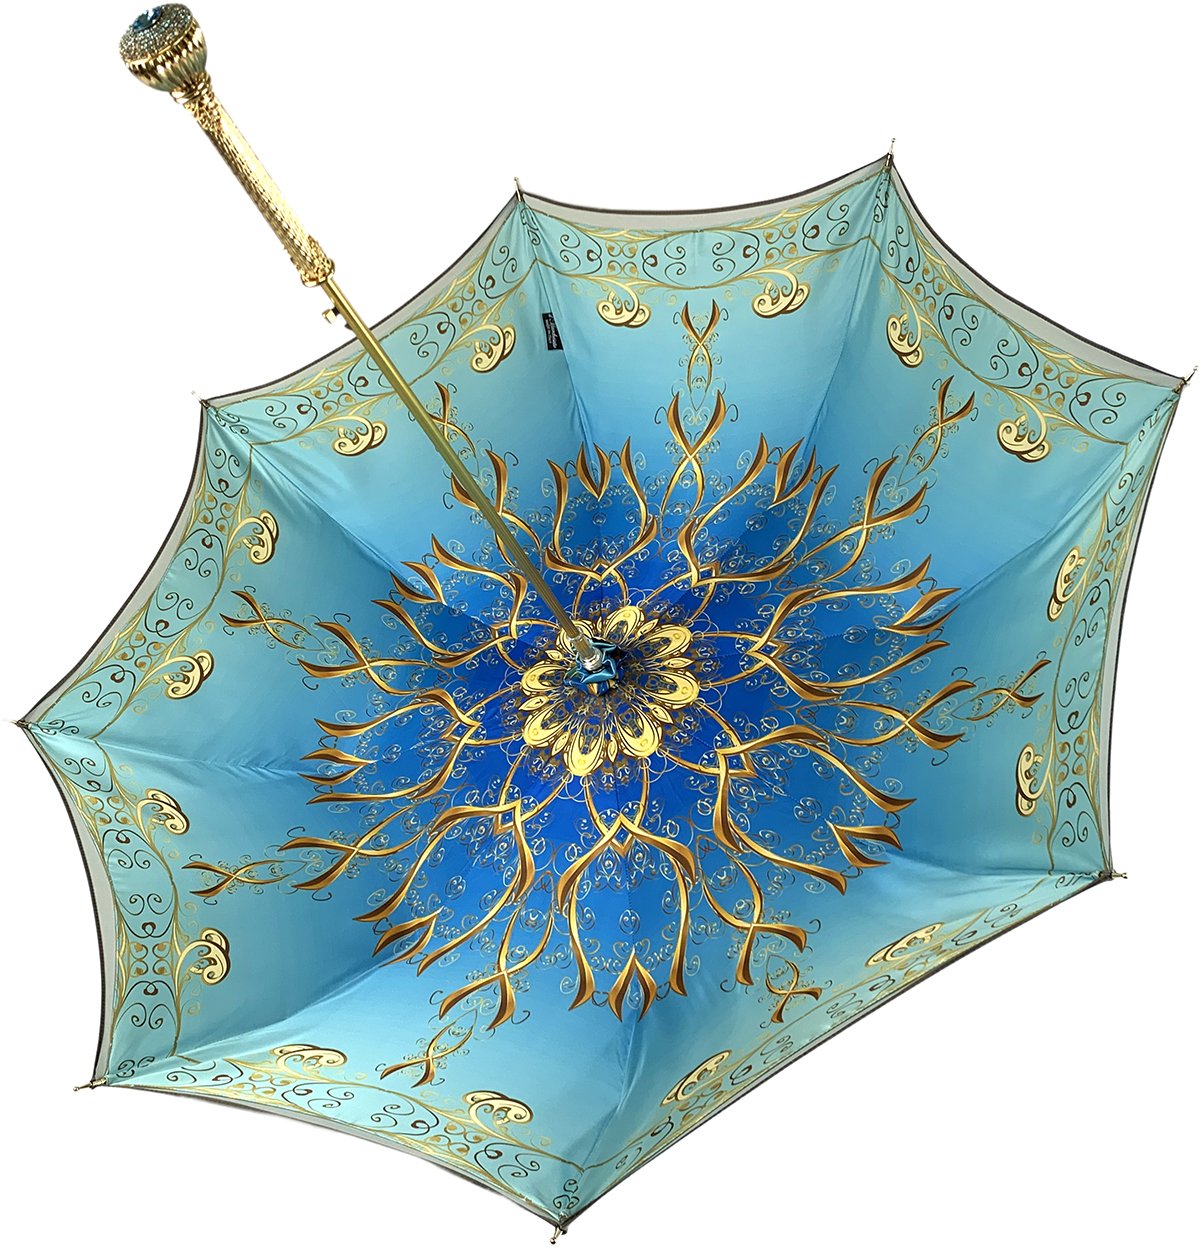 Elegant Burgundy Dot's Umbrella – ilMarchesato - Luxury Umbrellas, Canes  and Shoehorns